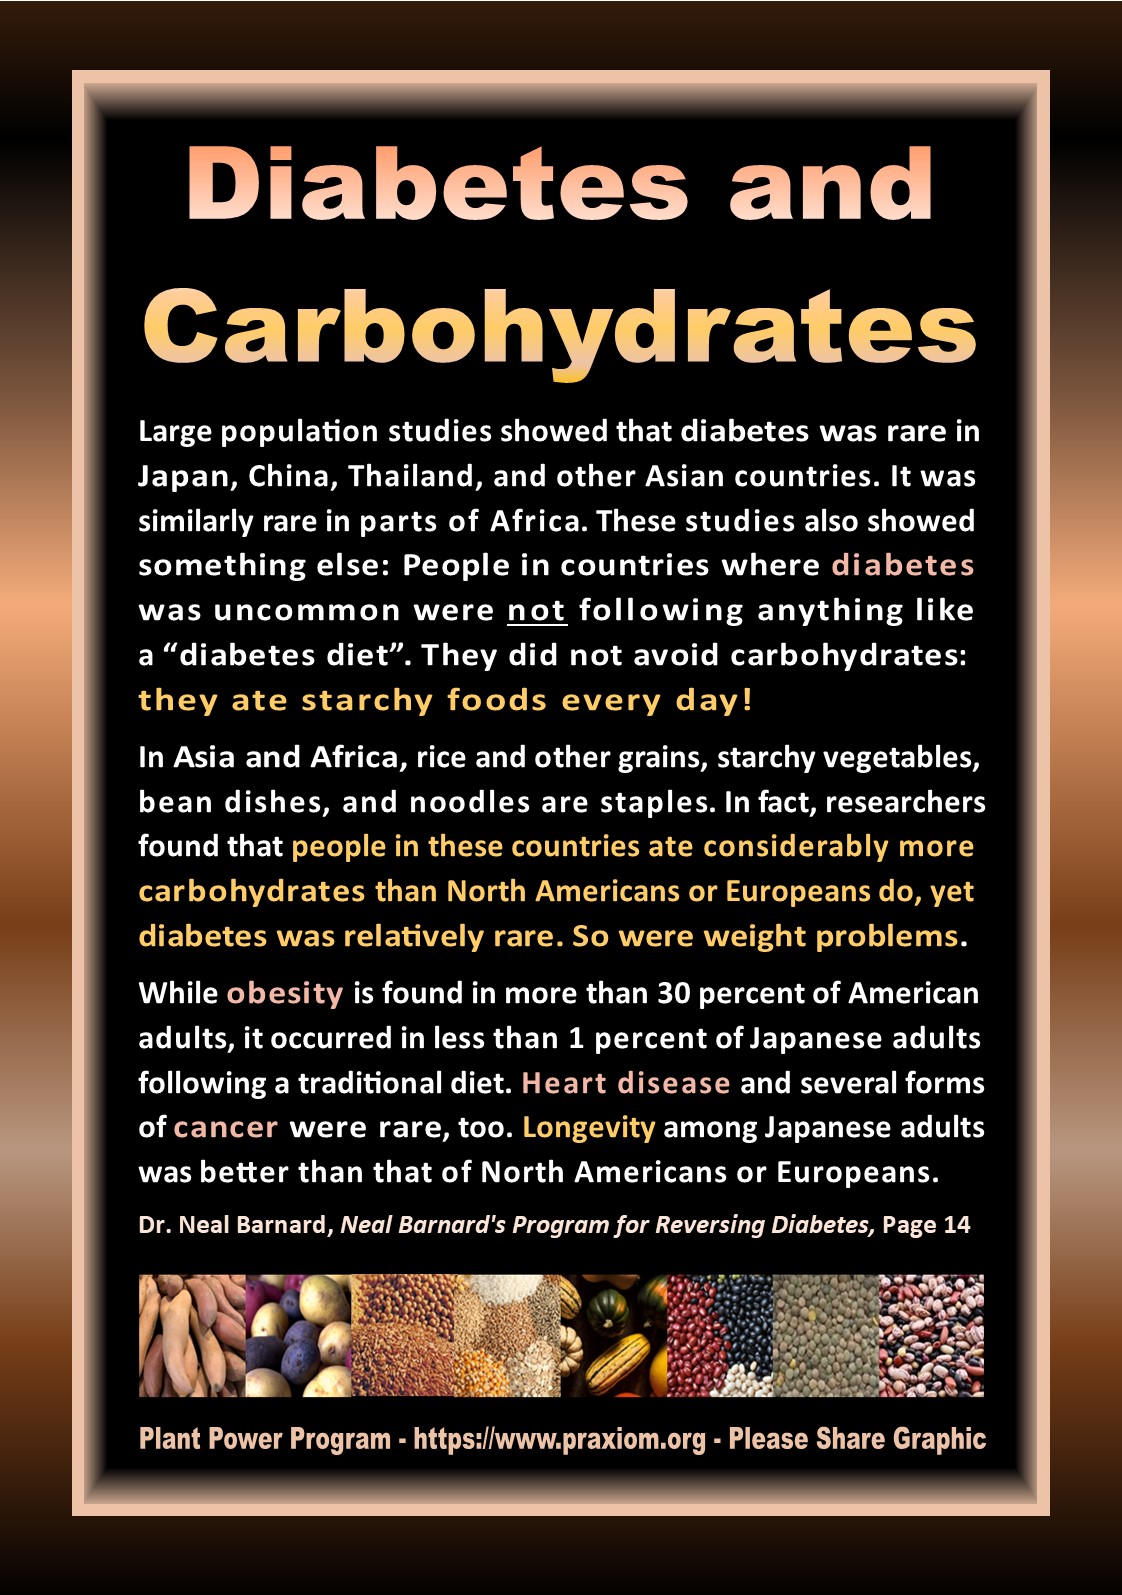 Diabetes and Carbs - Dr. Neal Barnard